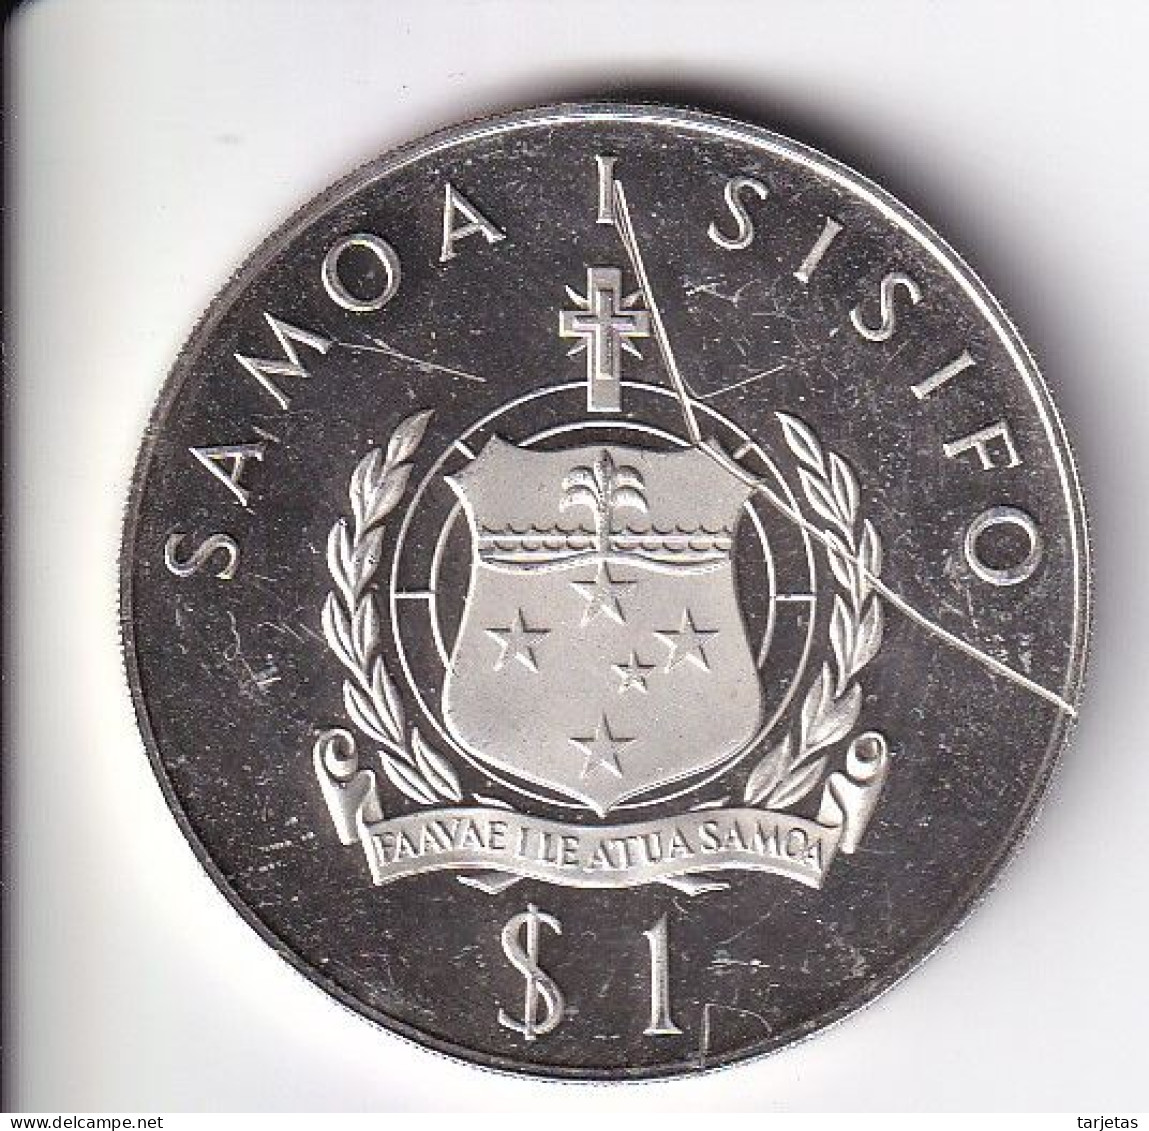 MONEDA DE PLATA DE SAMOA I SISIFO DE 1 DOLLAR DEL AÑO 1977 LINDBERGH FLIGHT - LA DE LA FOTO (CON RAYA DETRAS) - Samoa Americana